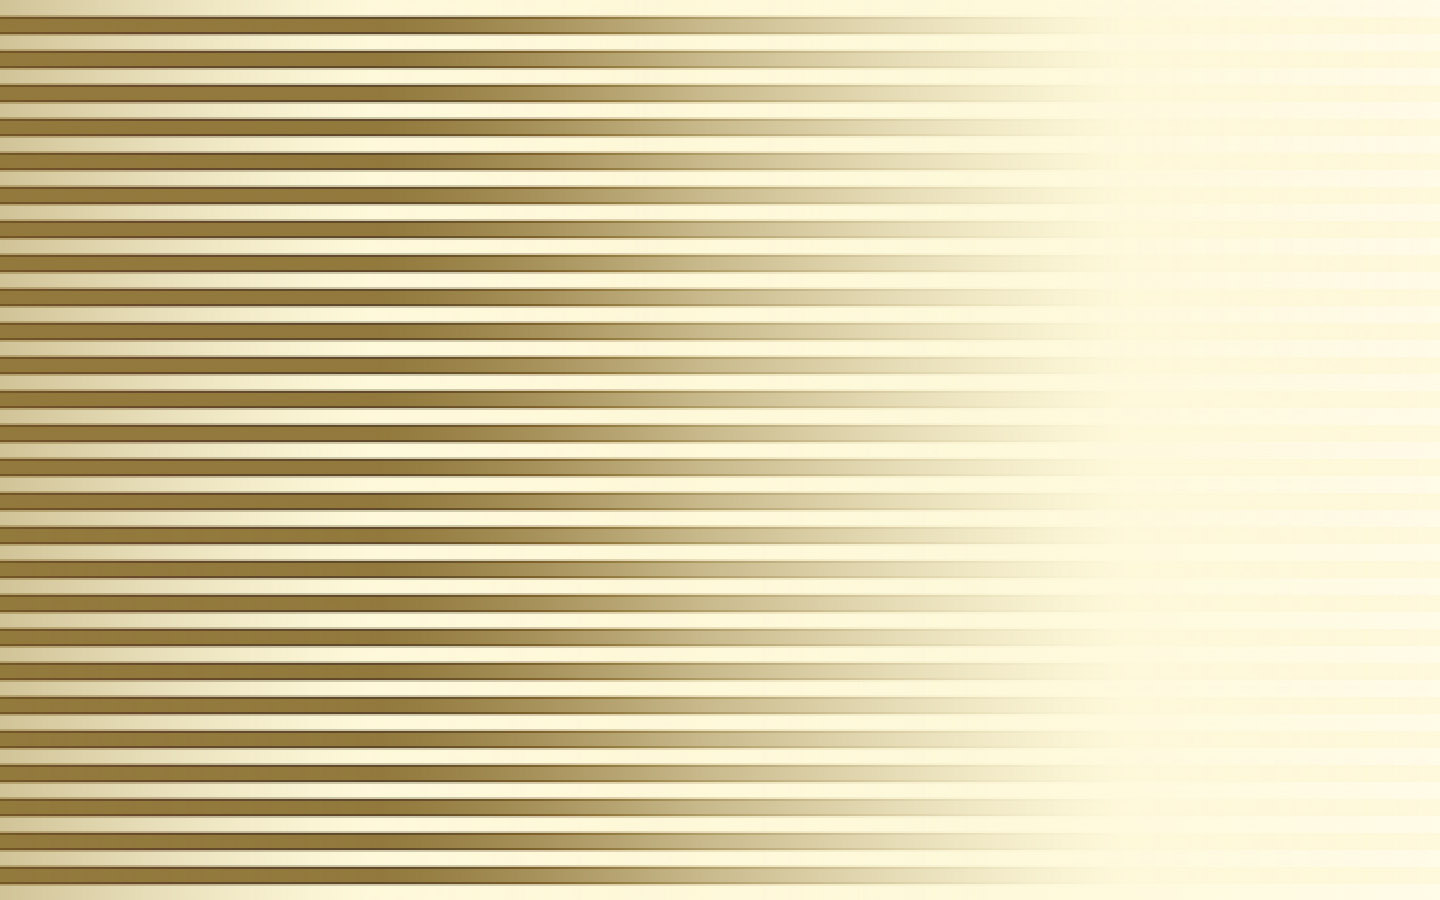 [48+] Black and Gold Striped Wallpaper | WallpaperSafari.com